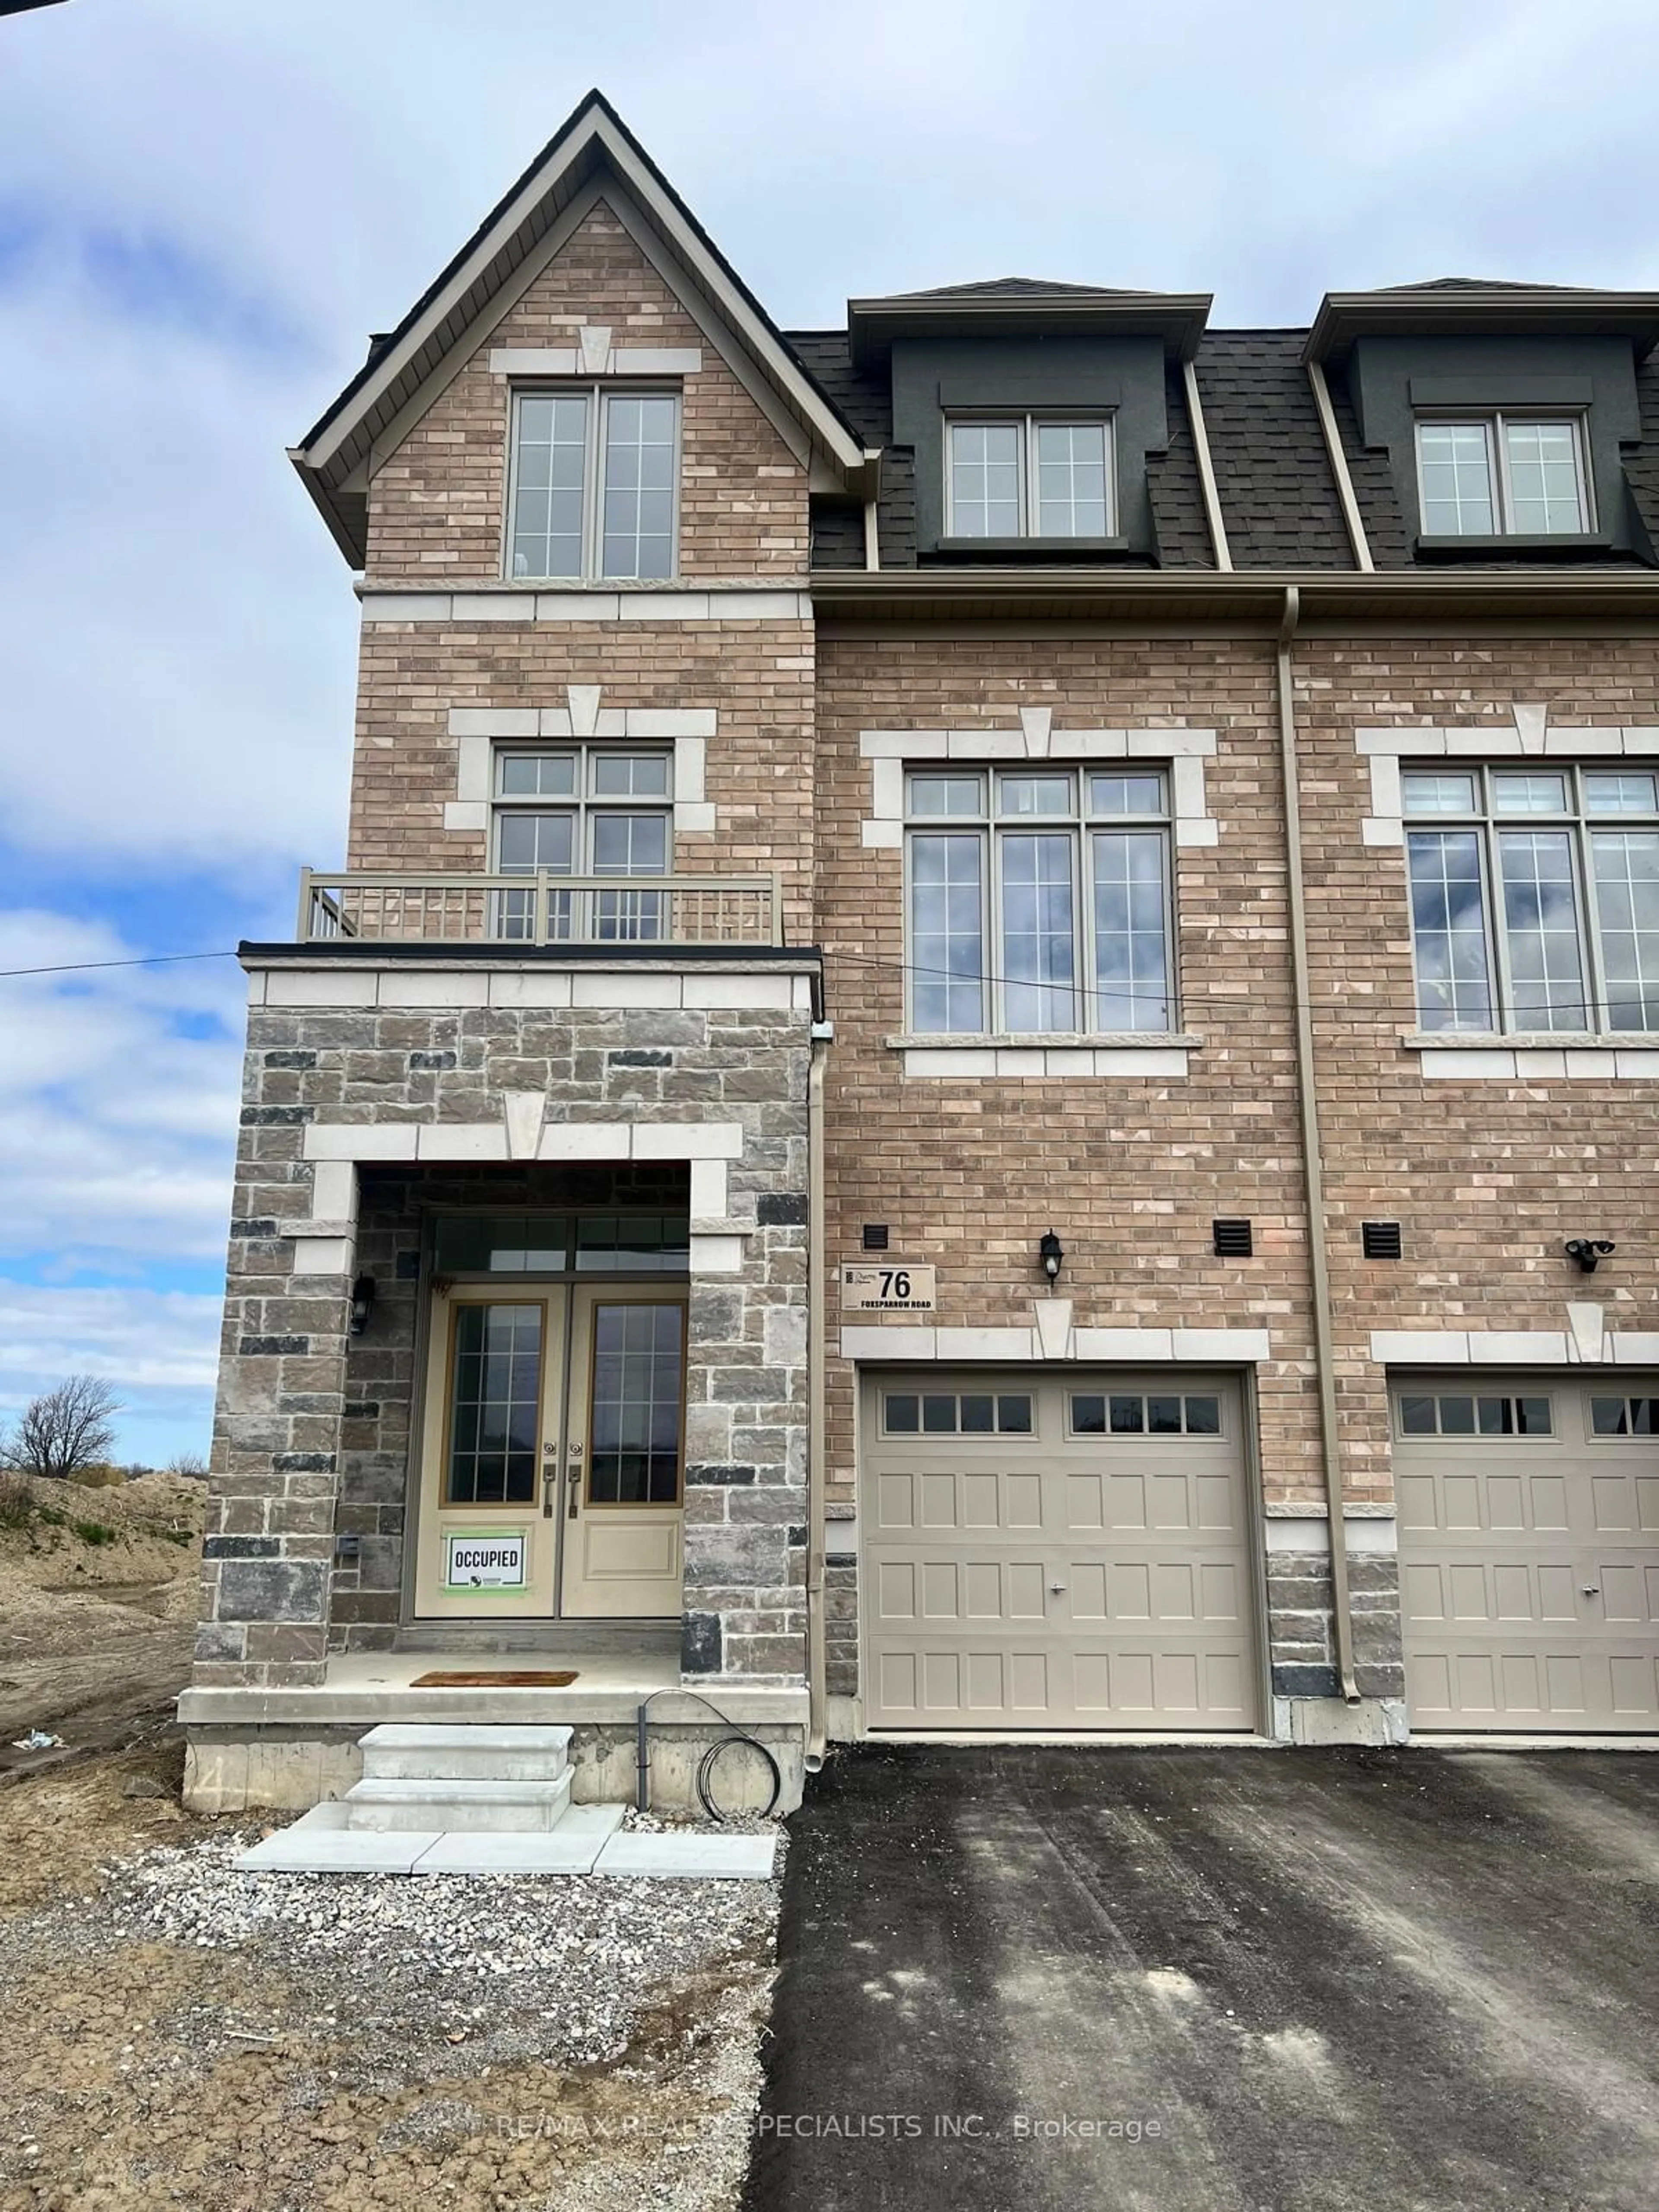 Home with brick exterior material for 76 Foxsparrow Rd, Brampton Ontario L6R 4E1